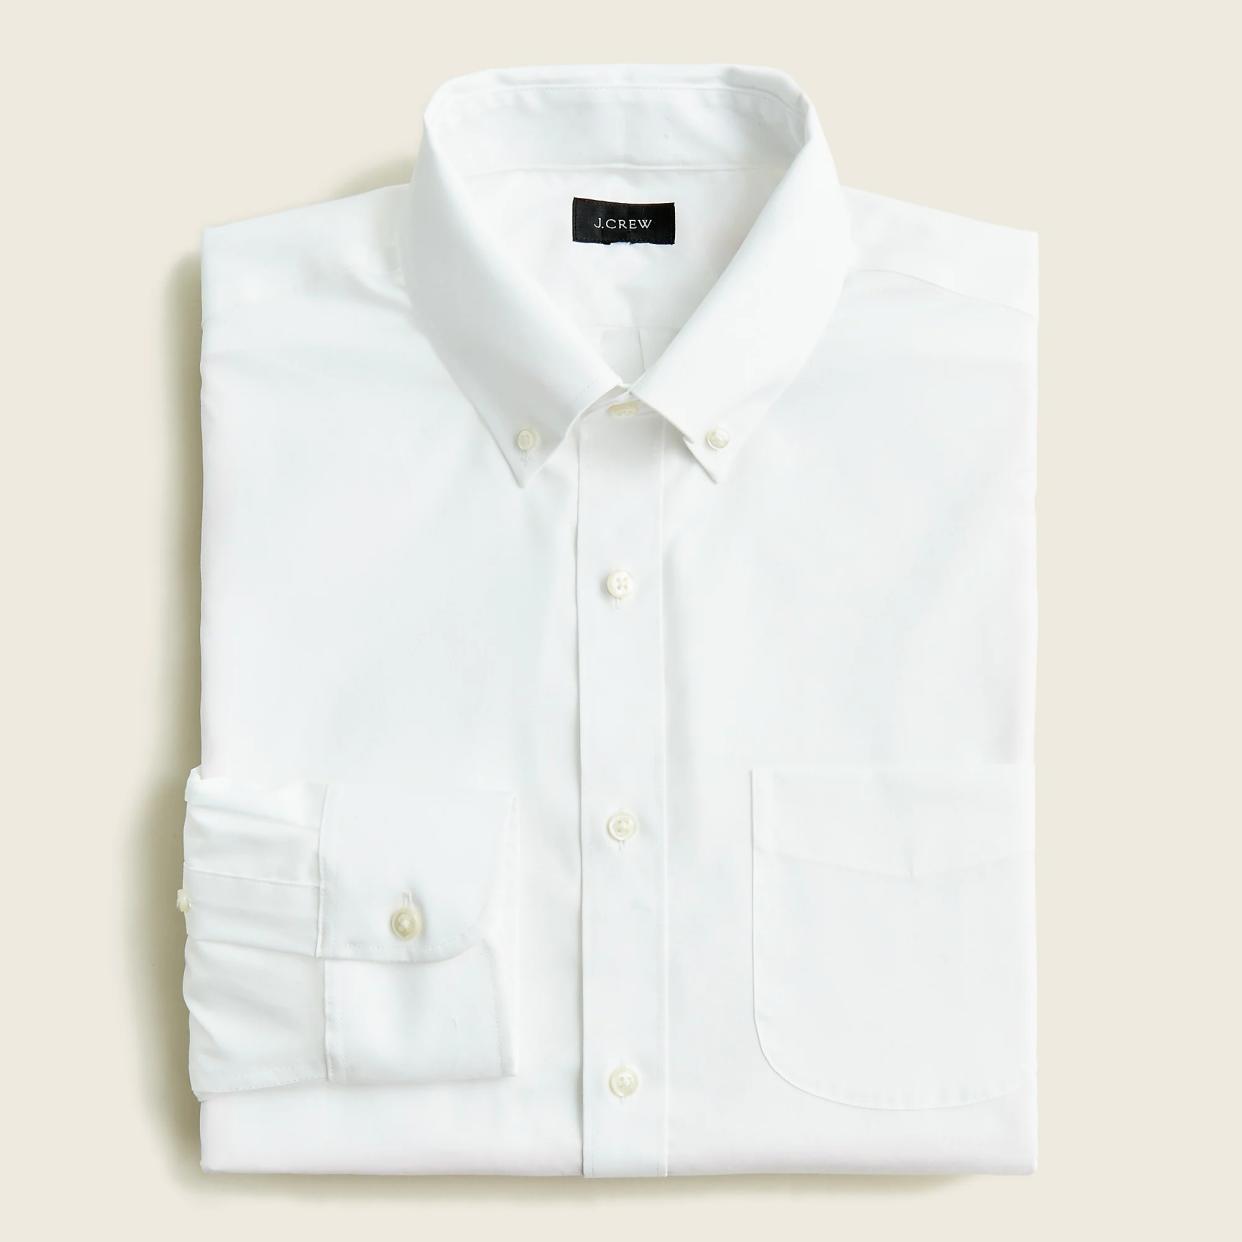 best white dress shirt, J.Crew bowery shirt